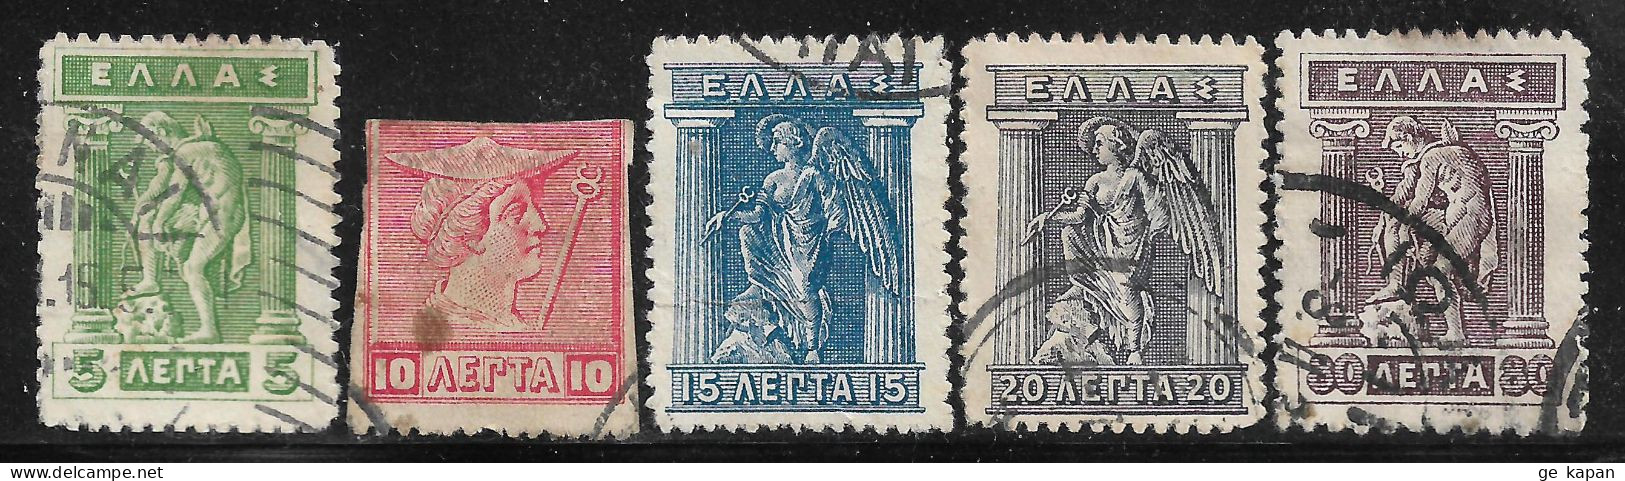 1913-1923 GREECE Set Of 5 Used Stamps (Scott # 217-220,225) CV $ 2.20 - Usati